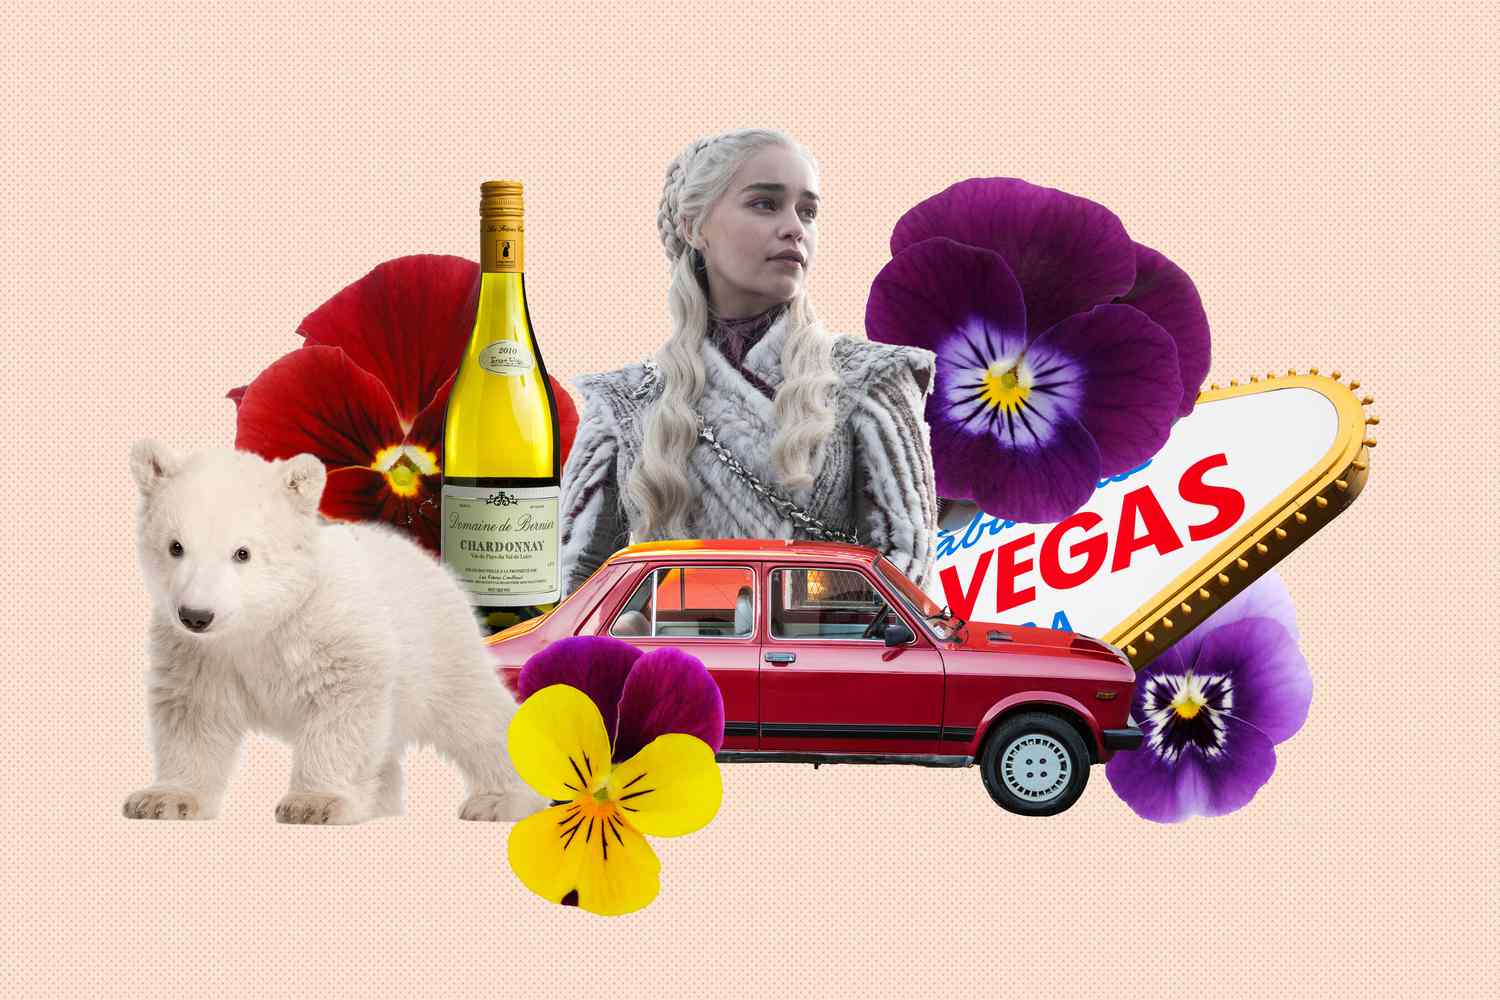 Khaleesi, Yugo, Vegas sign, Pansies, Chardonnay, bear cub in illustration